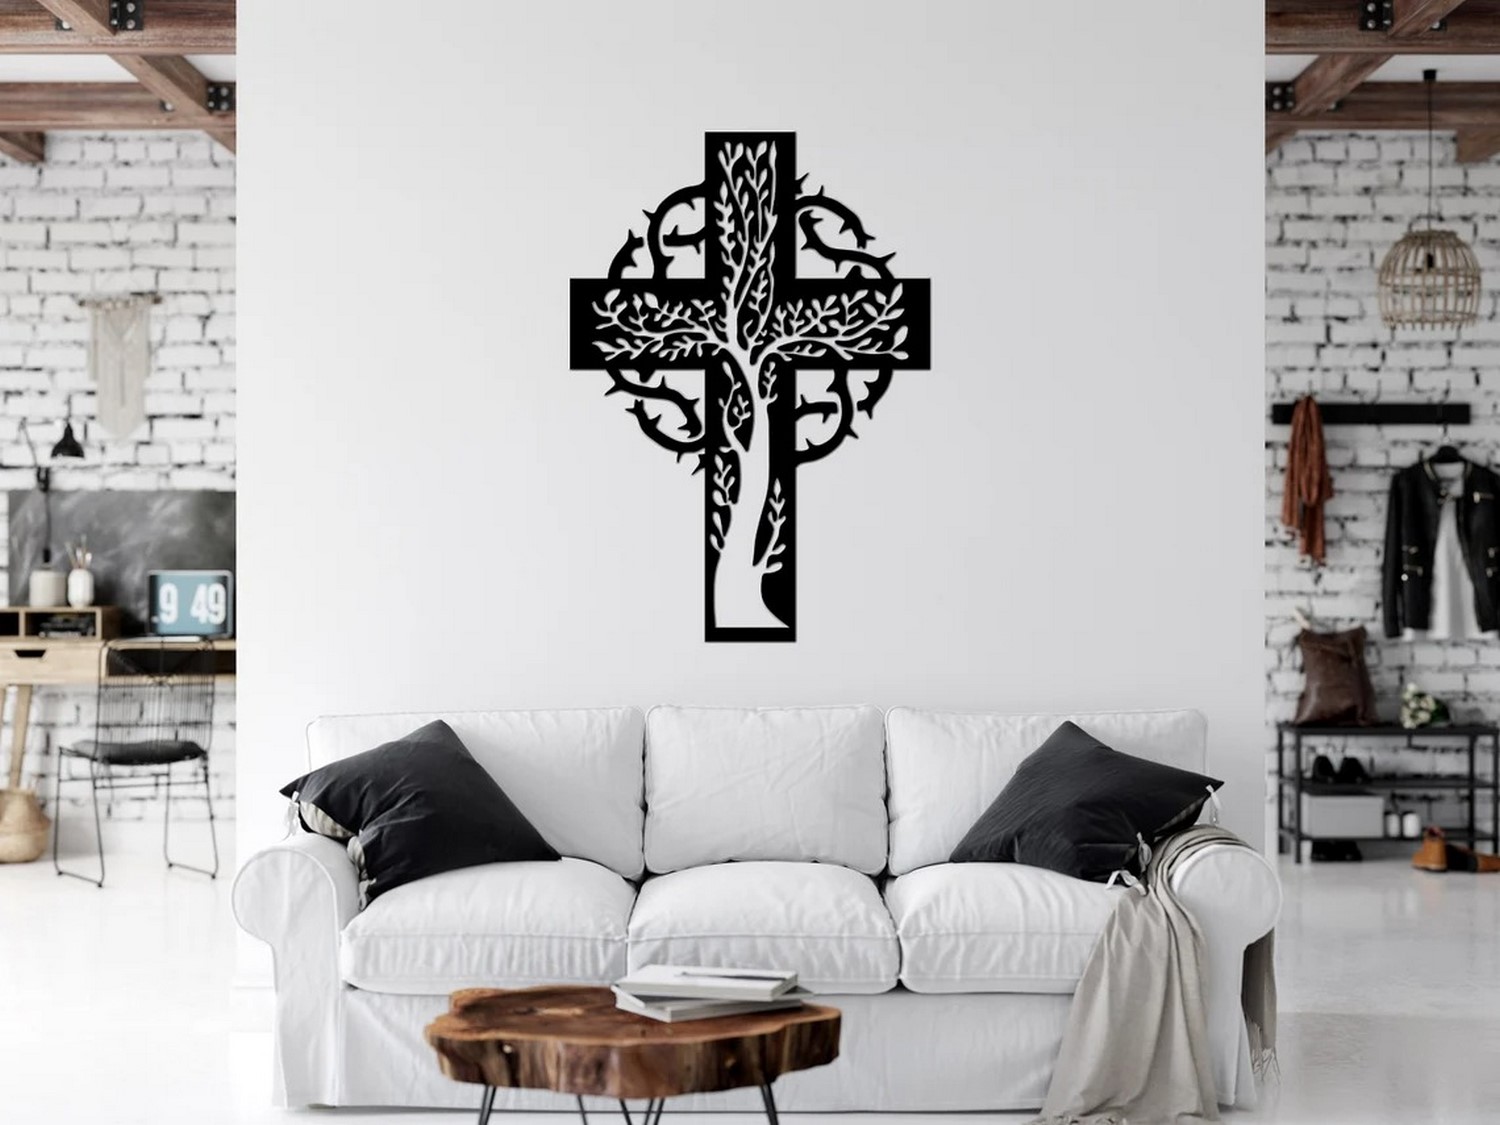 Jesus Cross Metal Sign Cross Wall Decor Religious Art Faith Gift